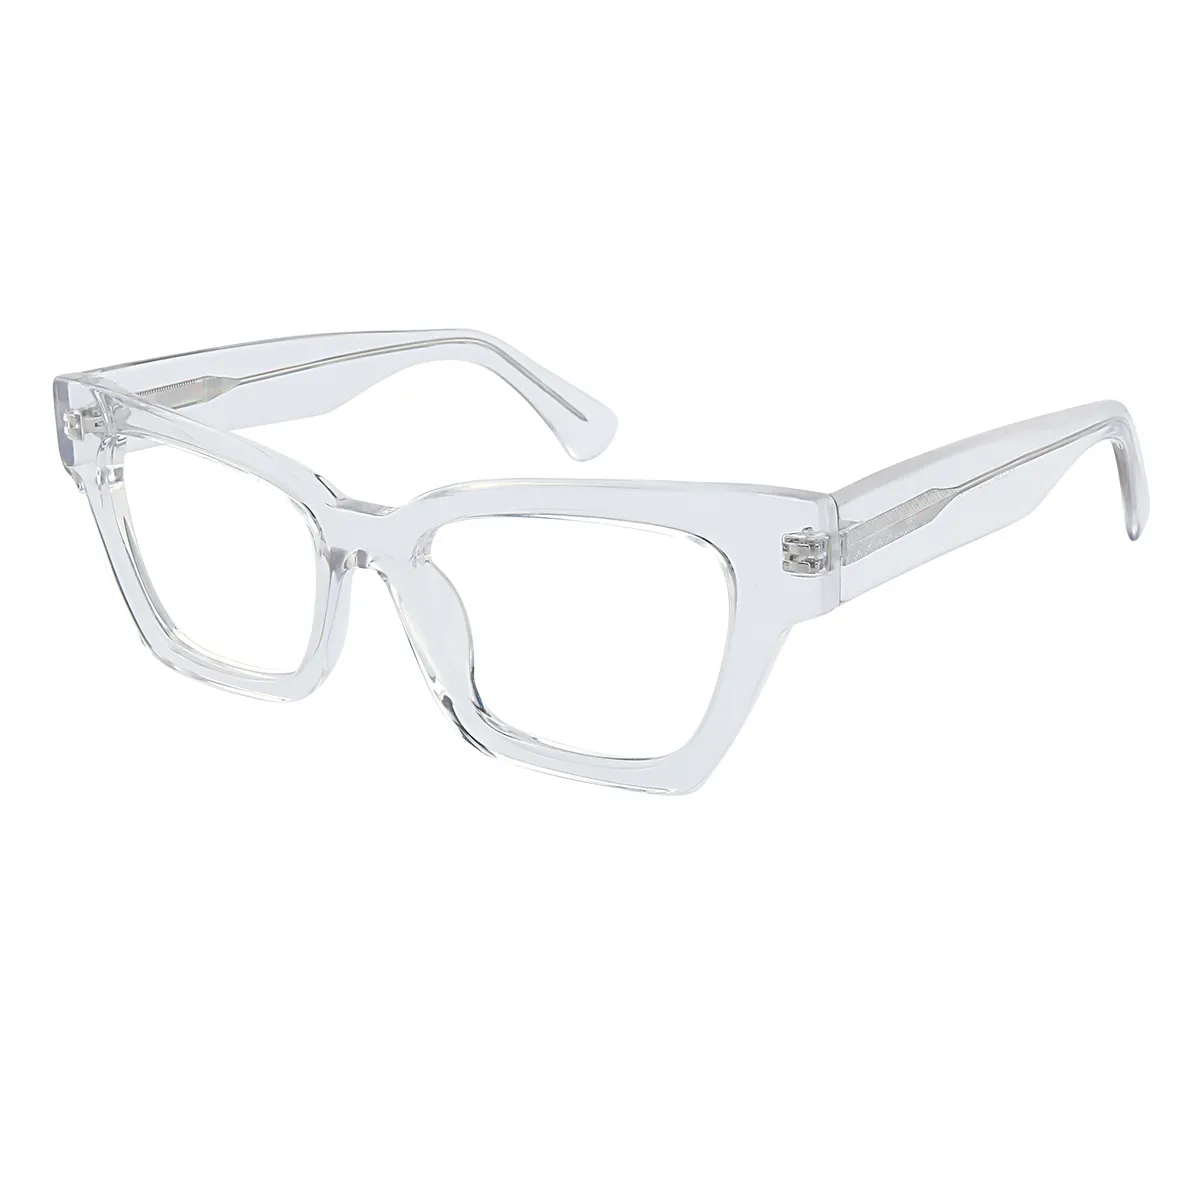 Alette - Square Translucent Glasses for Women - EFE